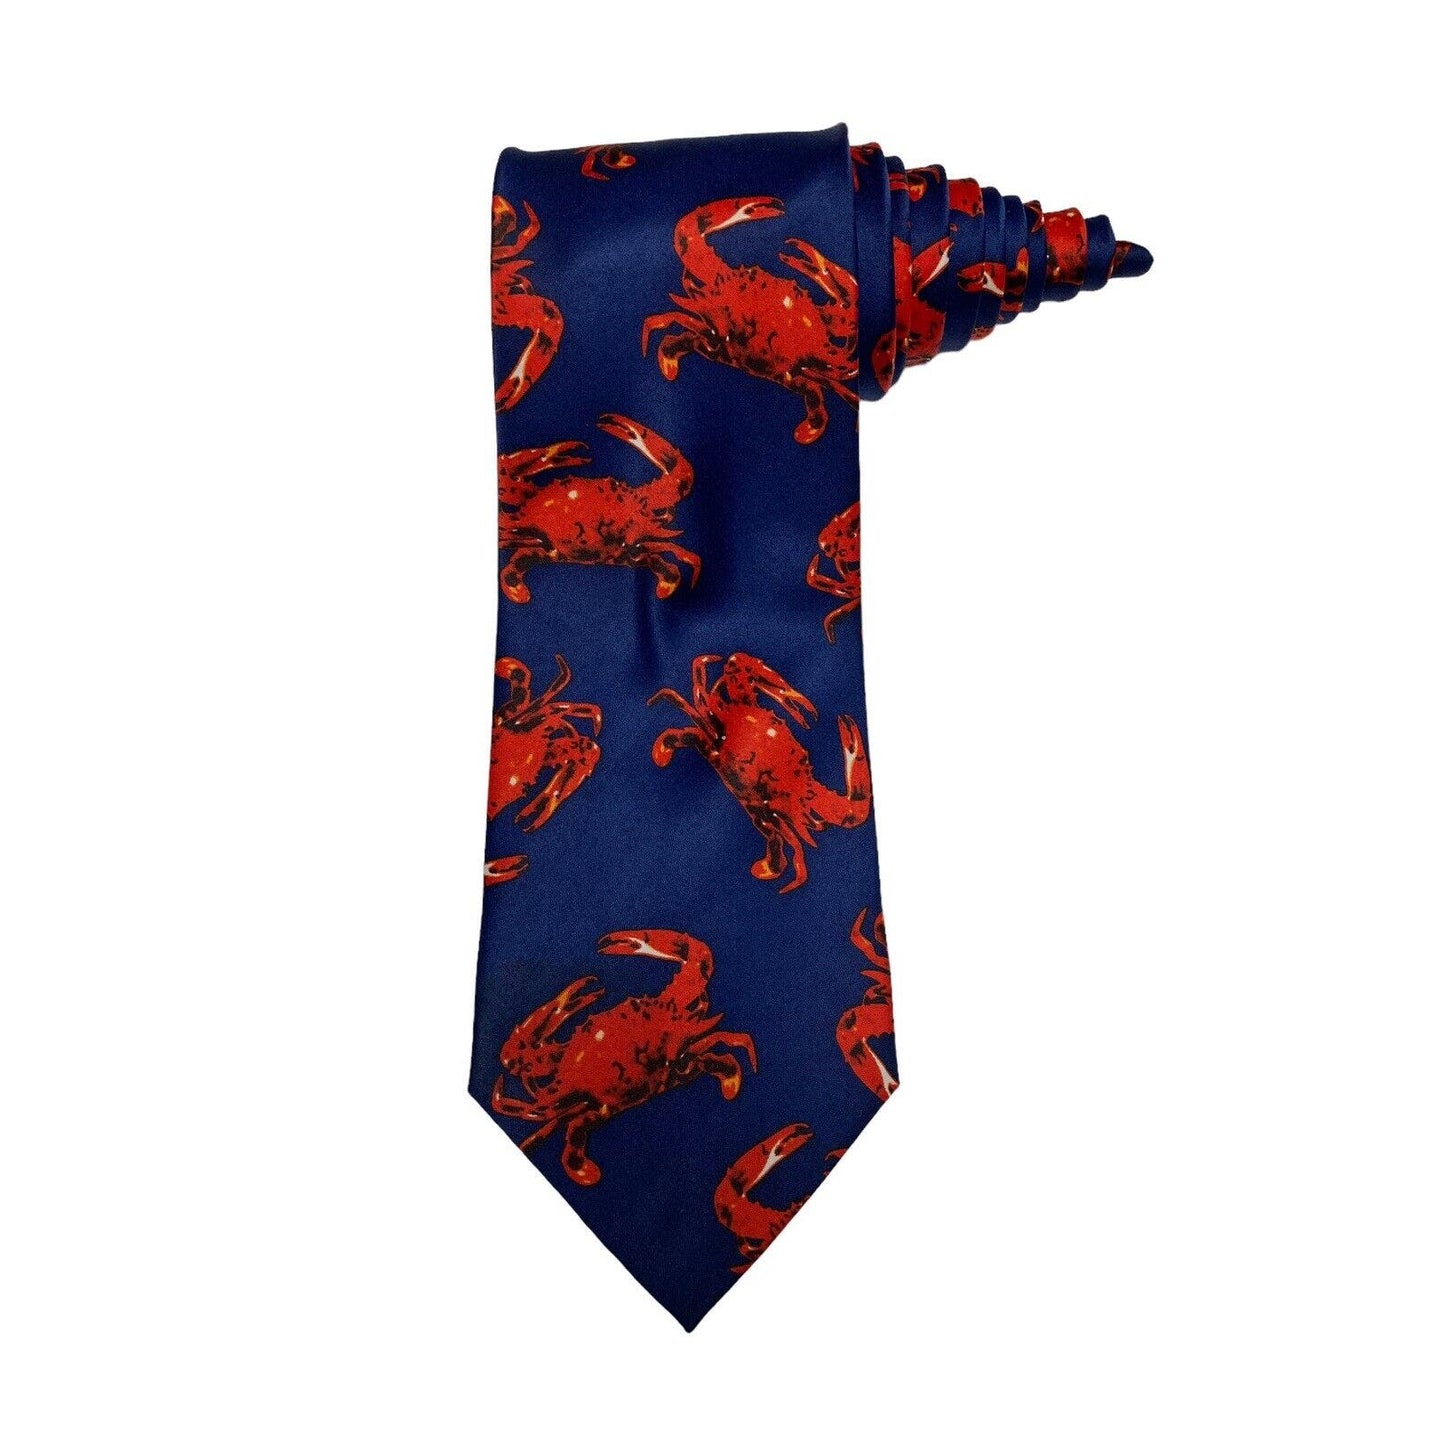 Fun Ties Crabs Shellfish Novelty Necktie Blue Red Polyester